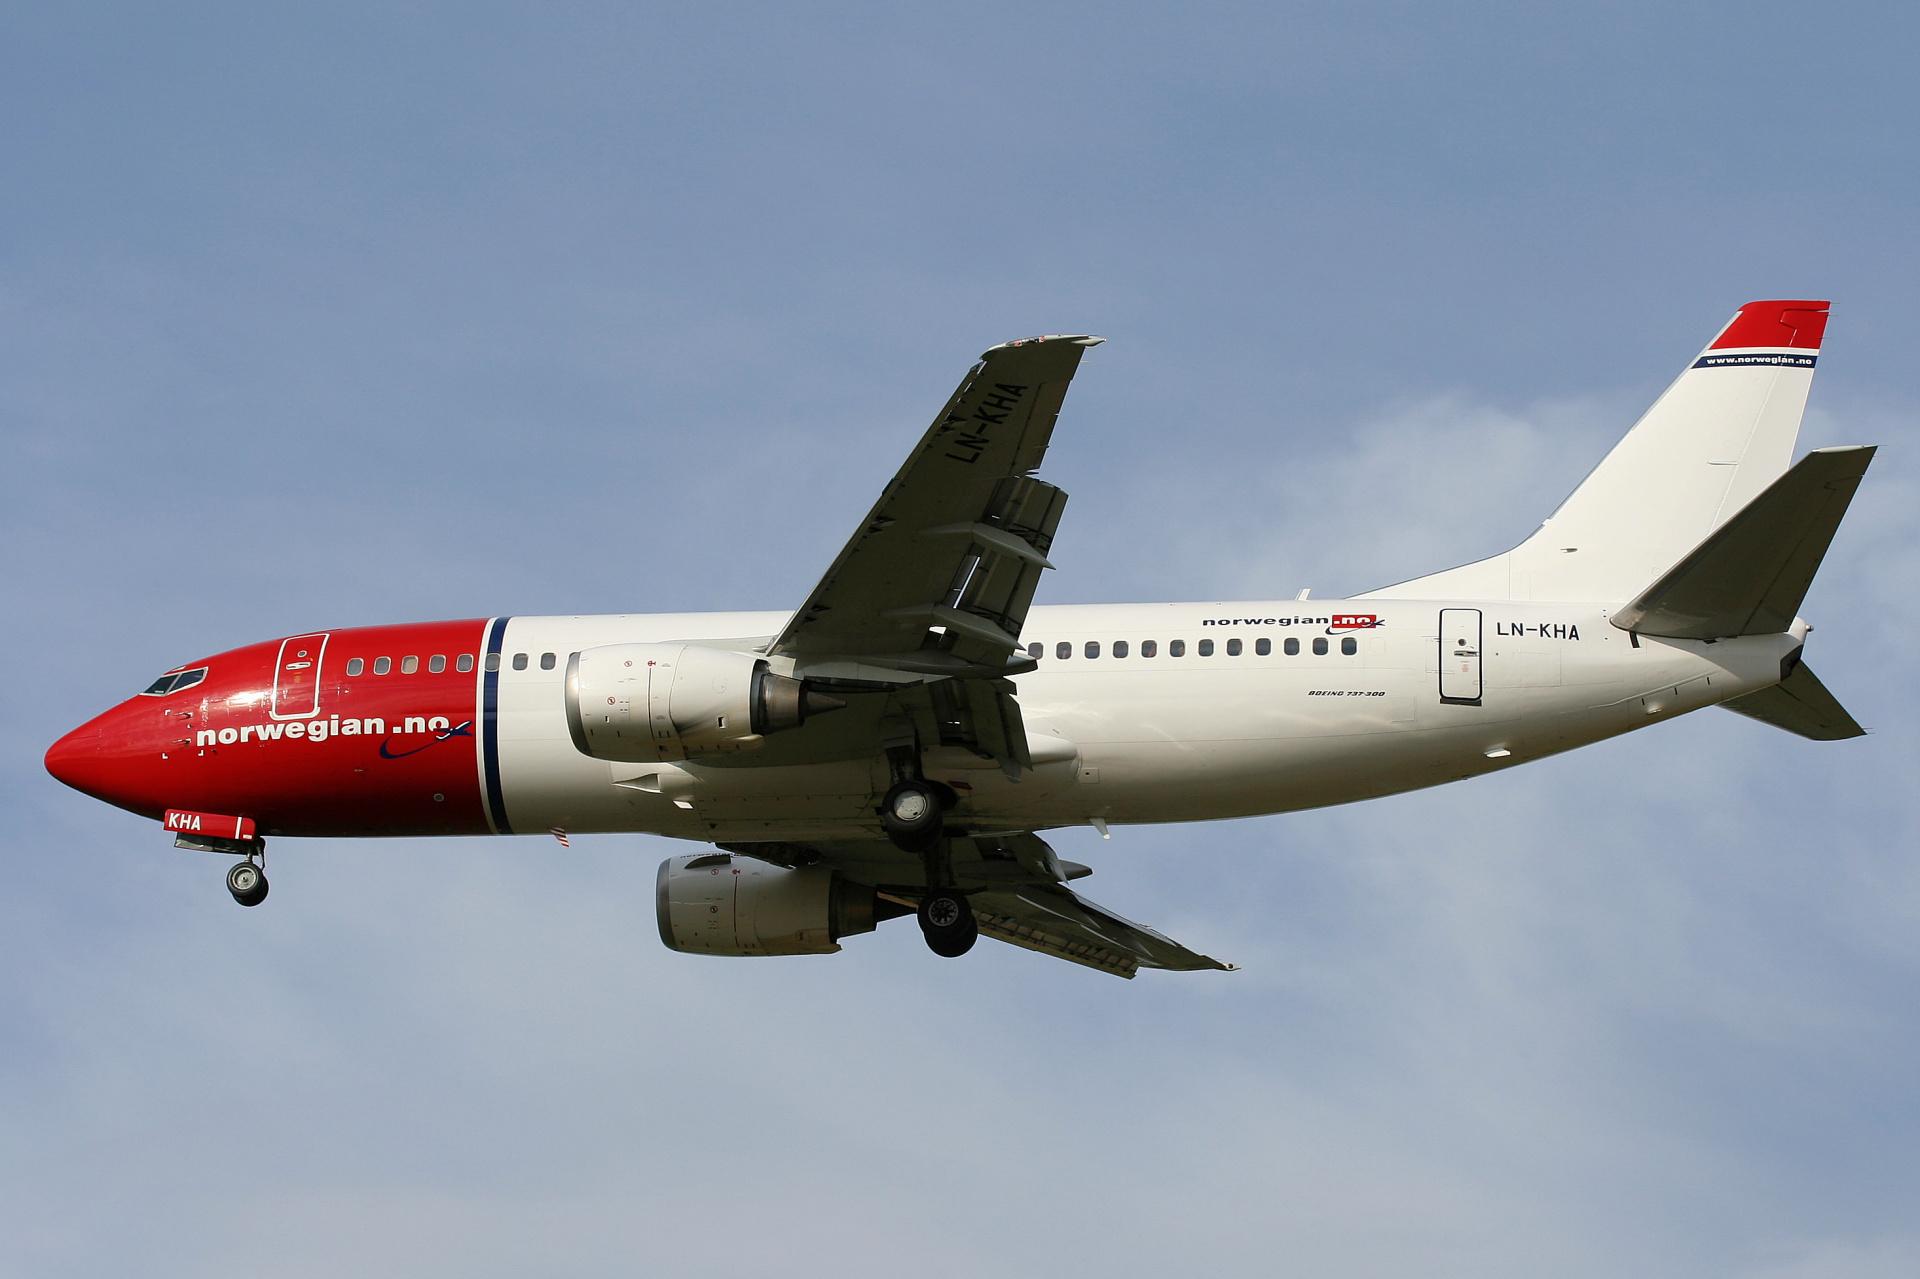 LN-KHA (Aircraft » EPWA Spotting » Boeing 737-300 » Norwegian Air Shuttle)